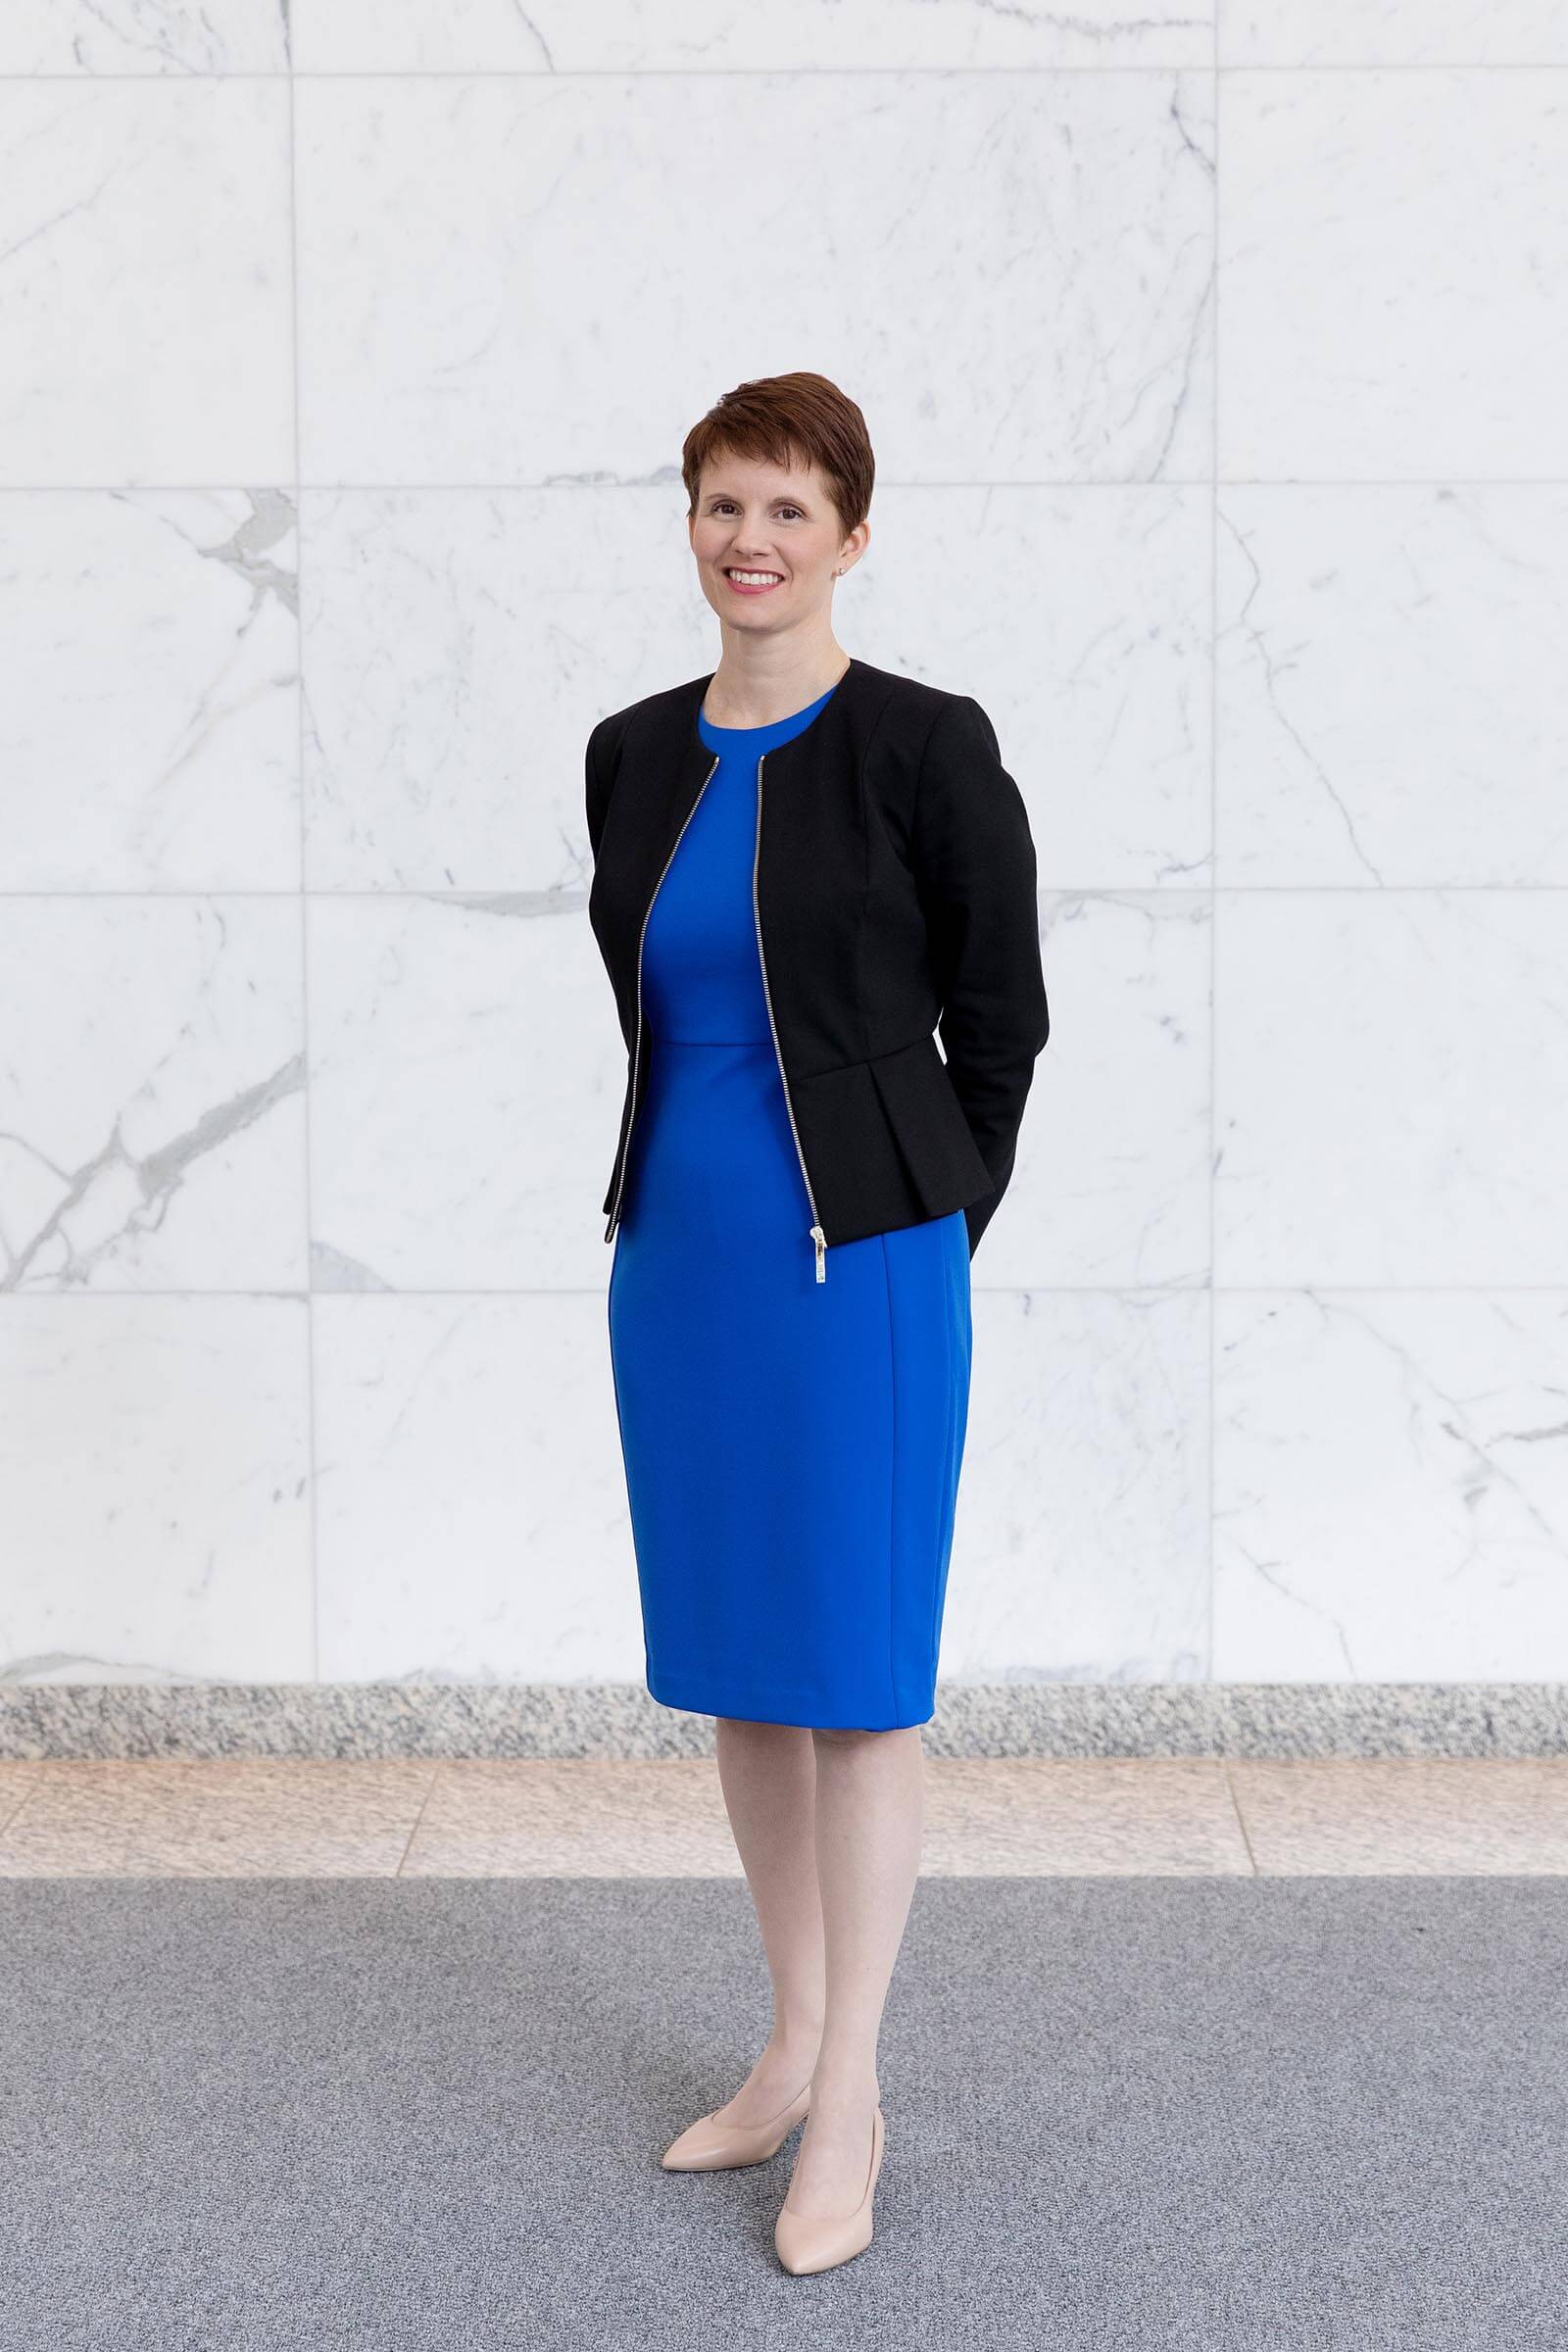 Tiffany Harding - Vice-President, 
Head of Wealth Planning